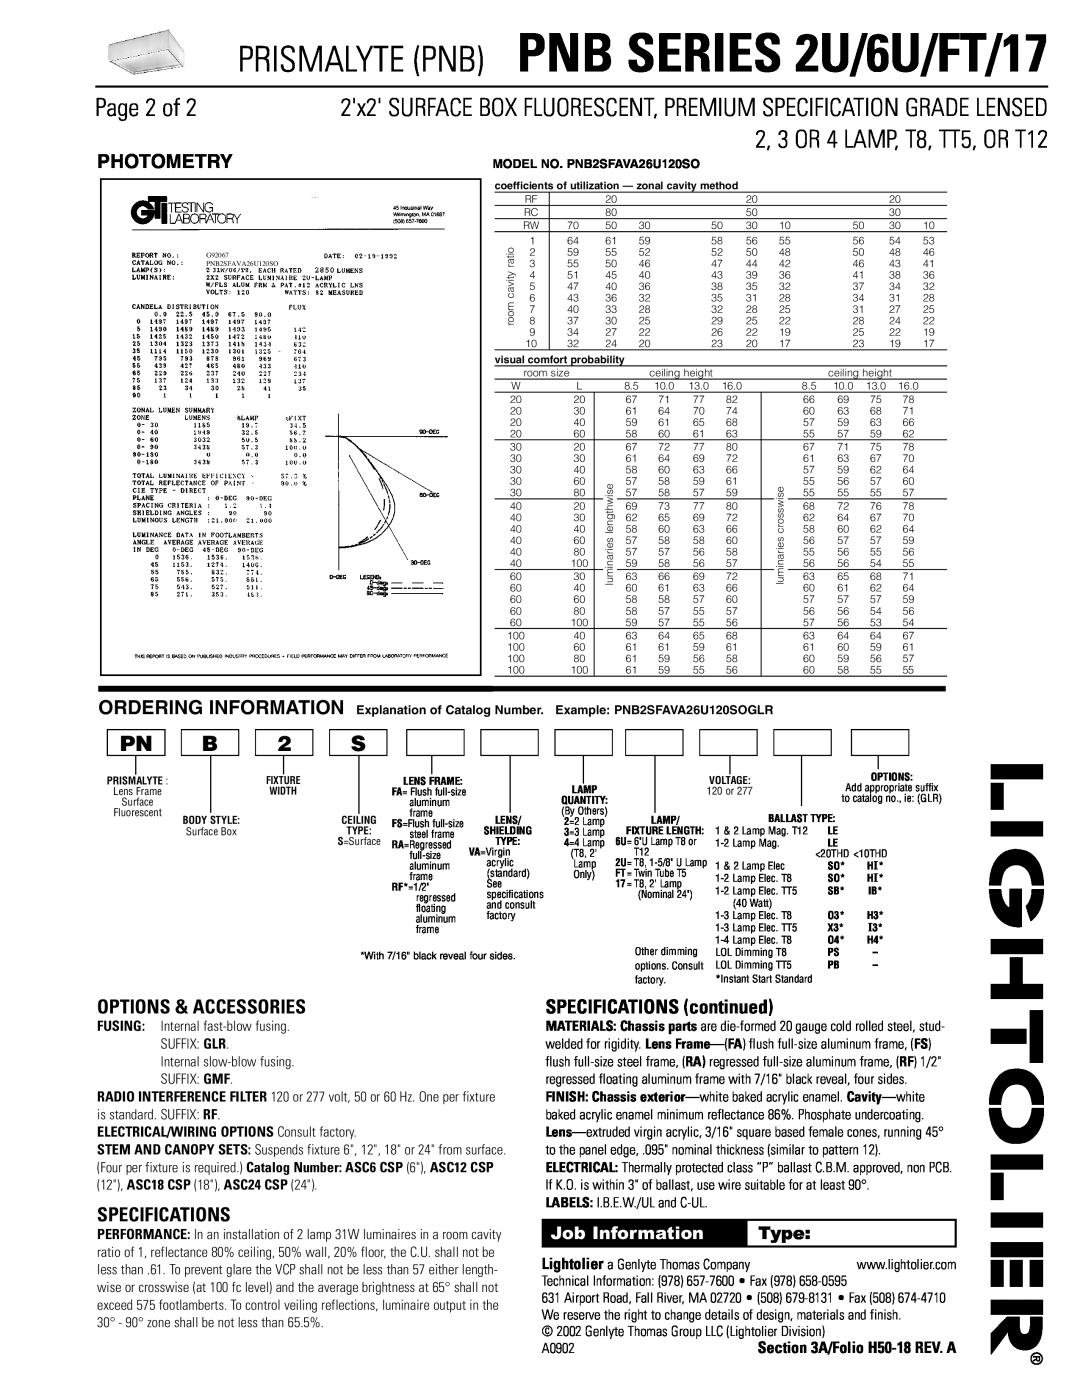 Lightolier PNB SERIES 2U/6U/FT/17 Page 2 of, Options & Accessories, Specifications, SPECIFICATIONS continued, Pn B, Type 